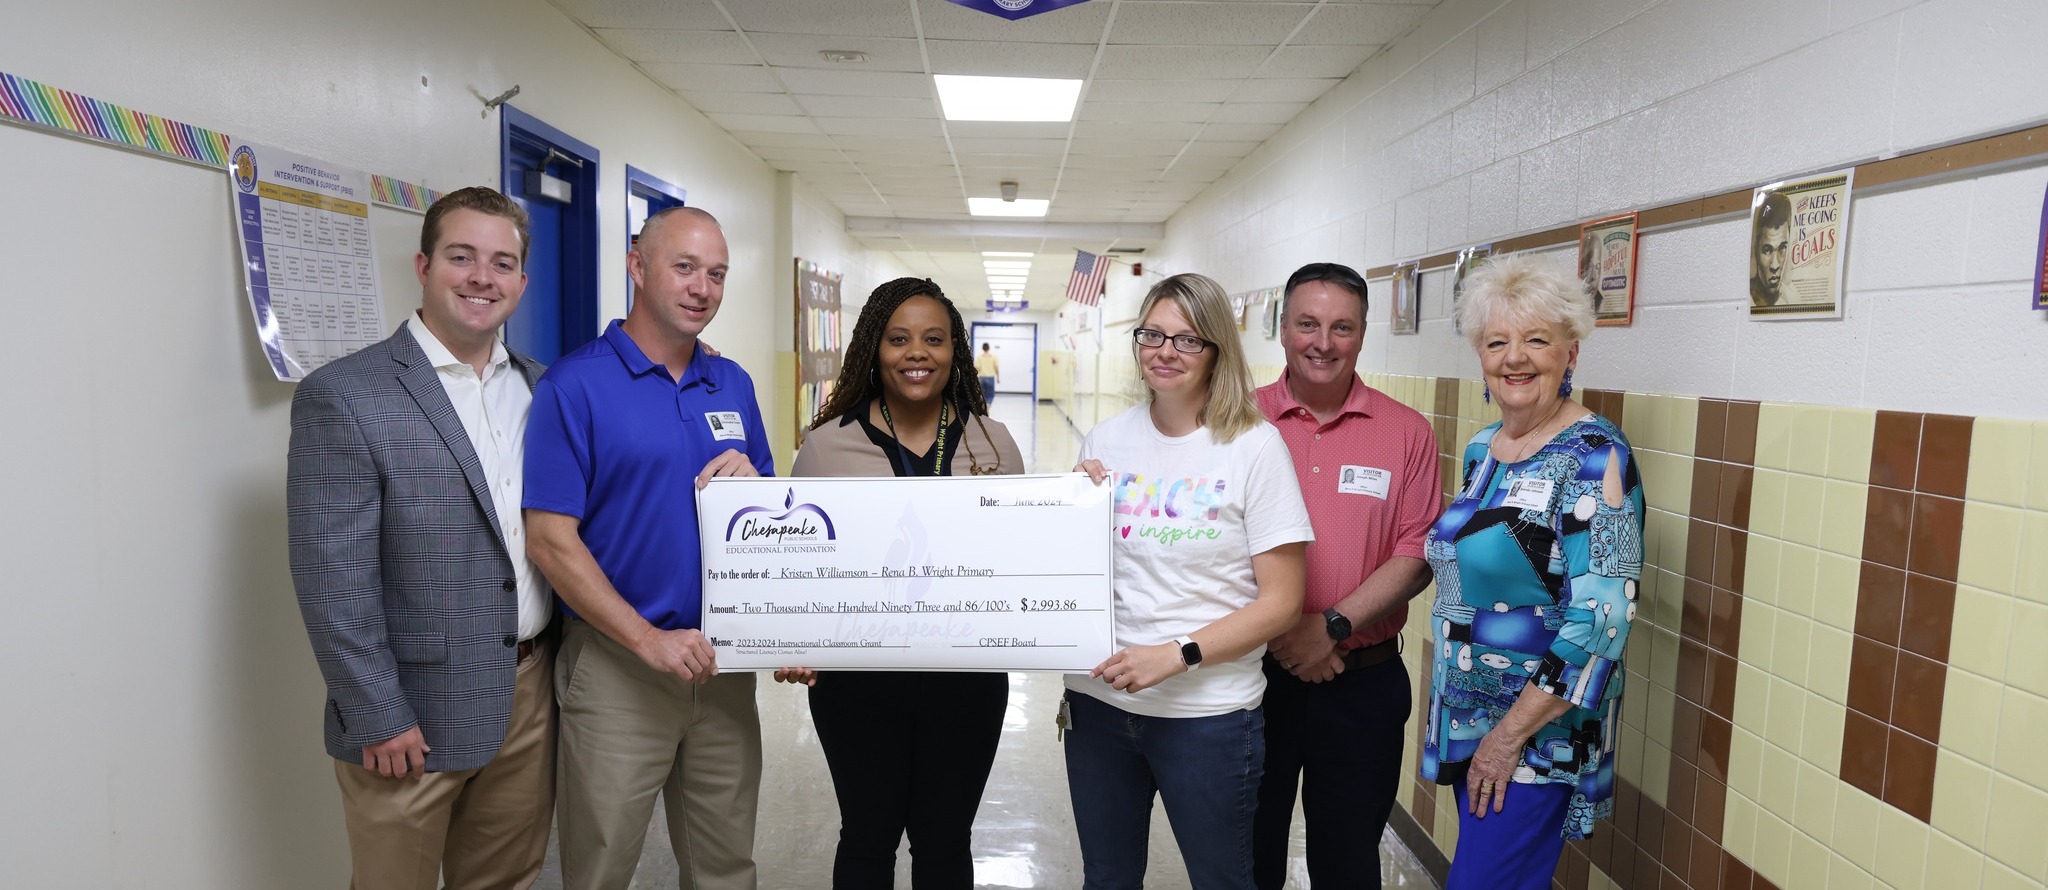 Teacher awarded a grant check at school